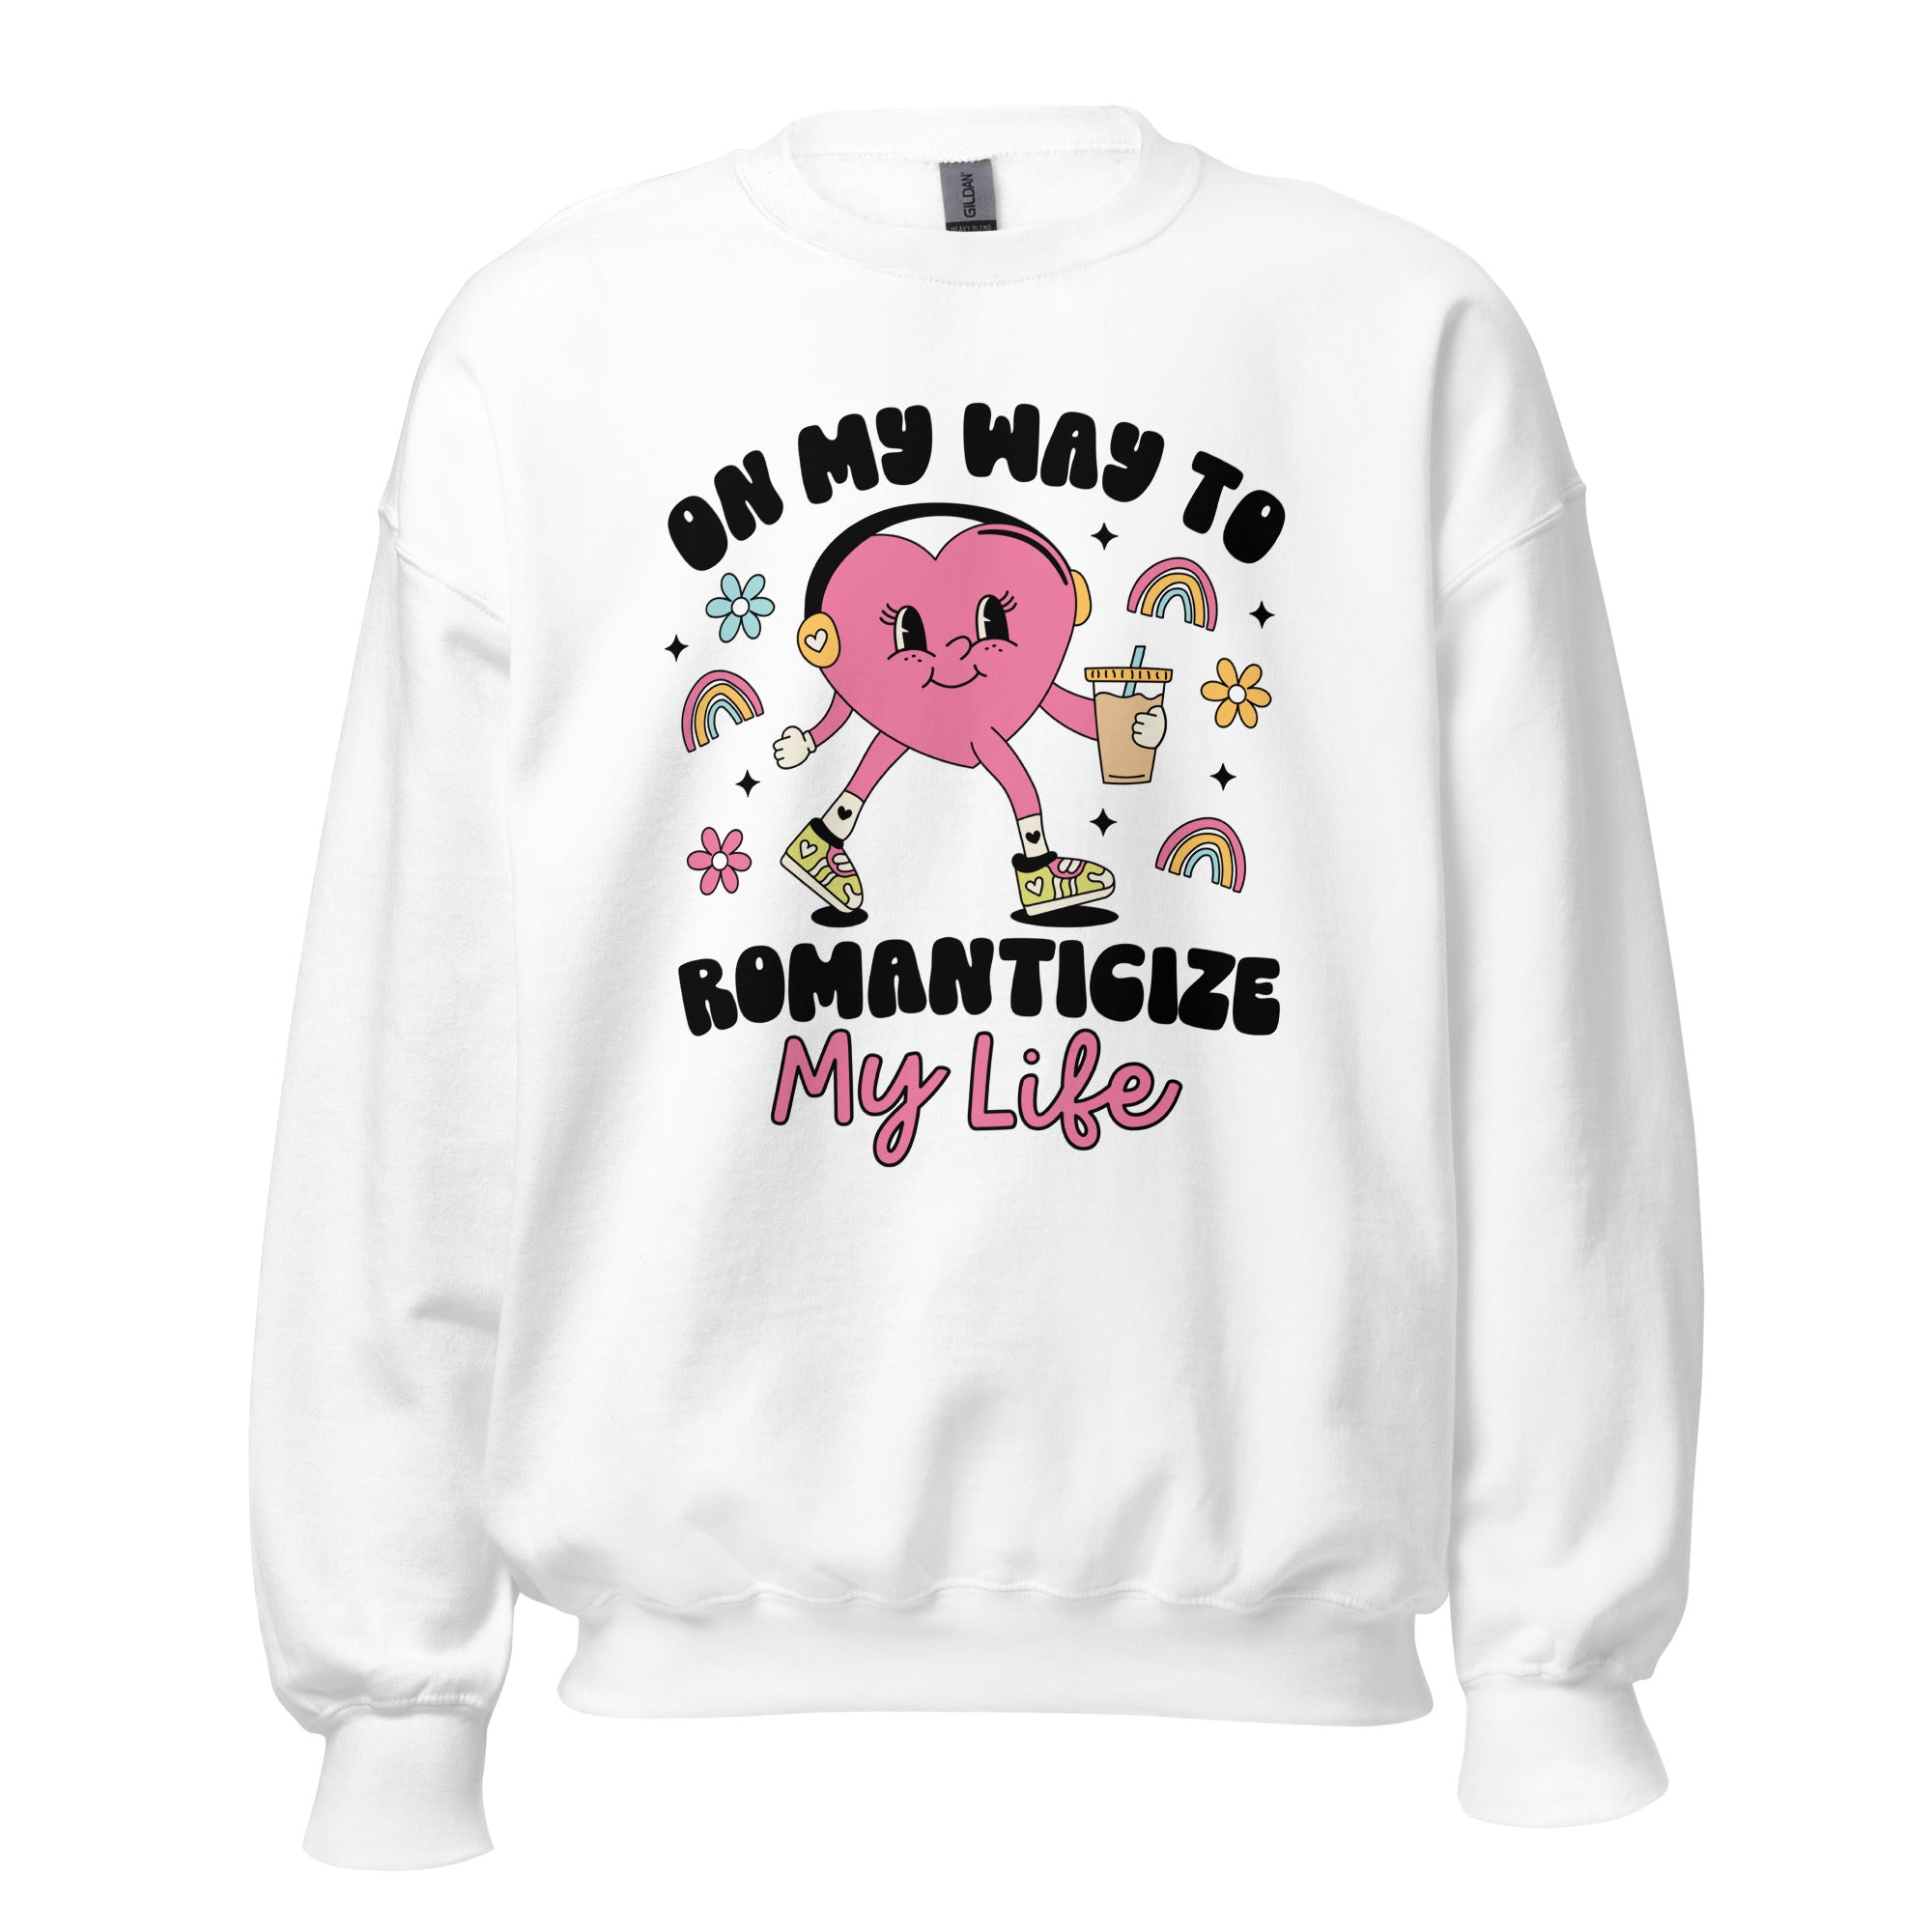 Romanticize Your Life Sweatshirt